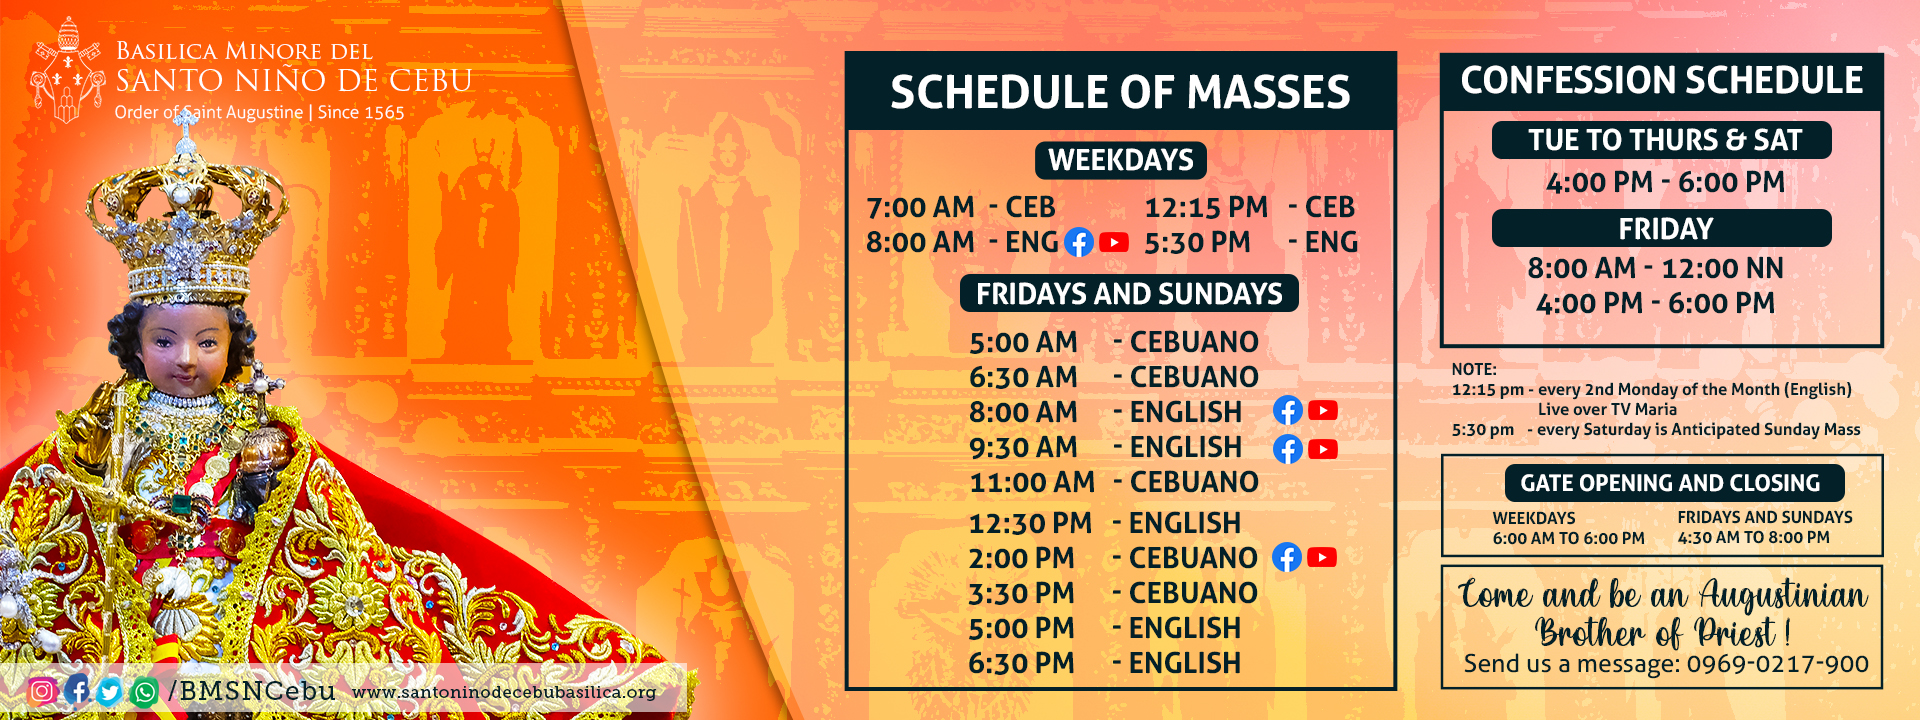 Mass Schedules Sto Nino Basilica Minore Del Santo Niño De Cebu